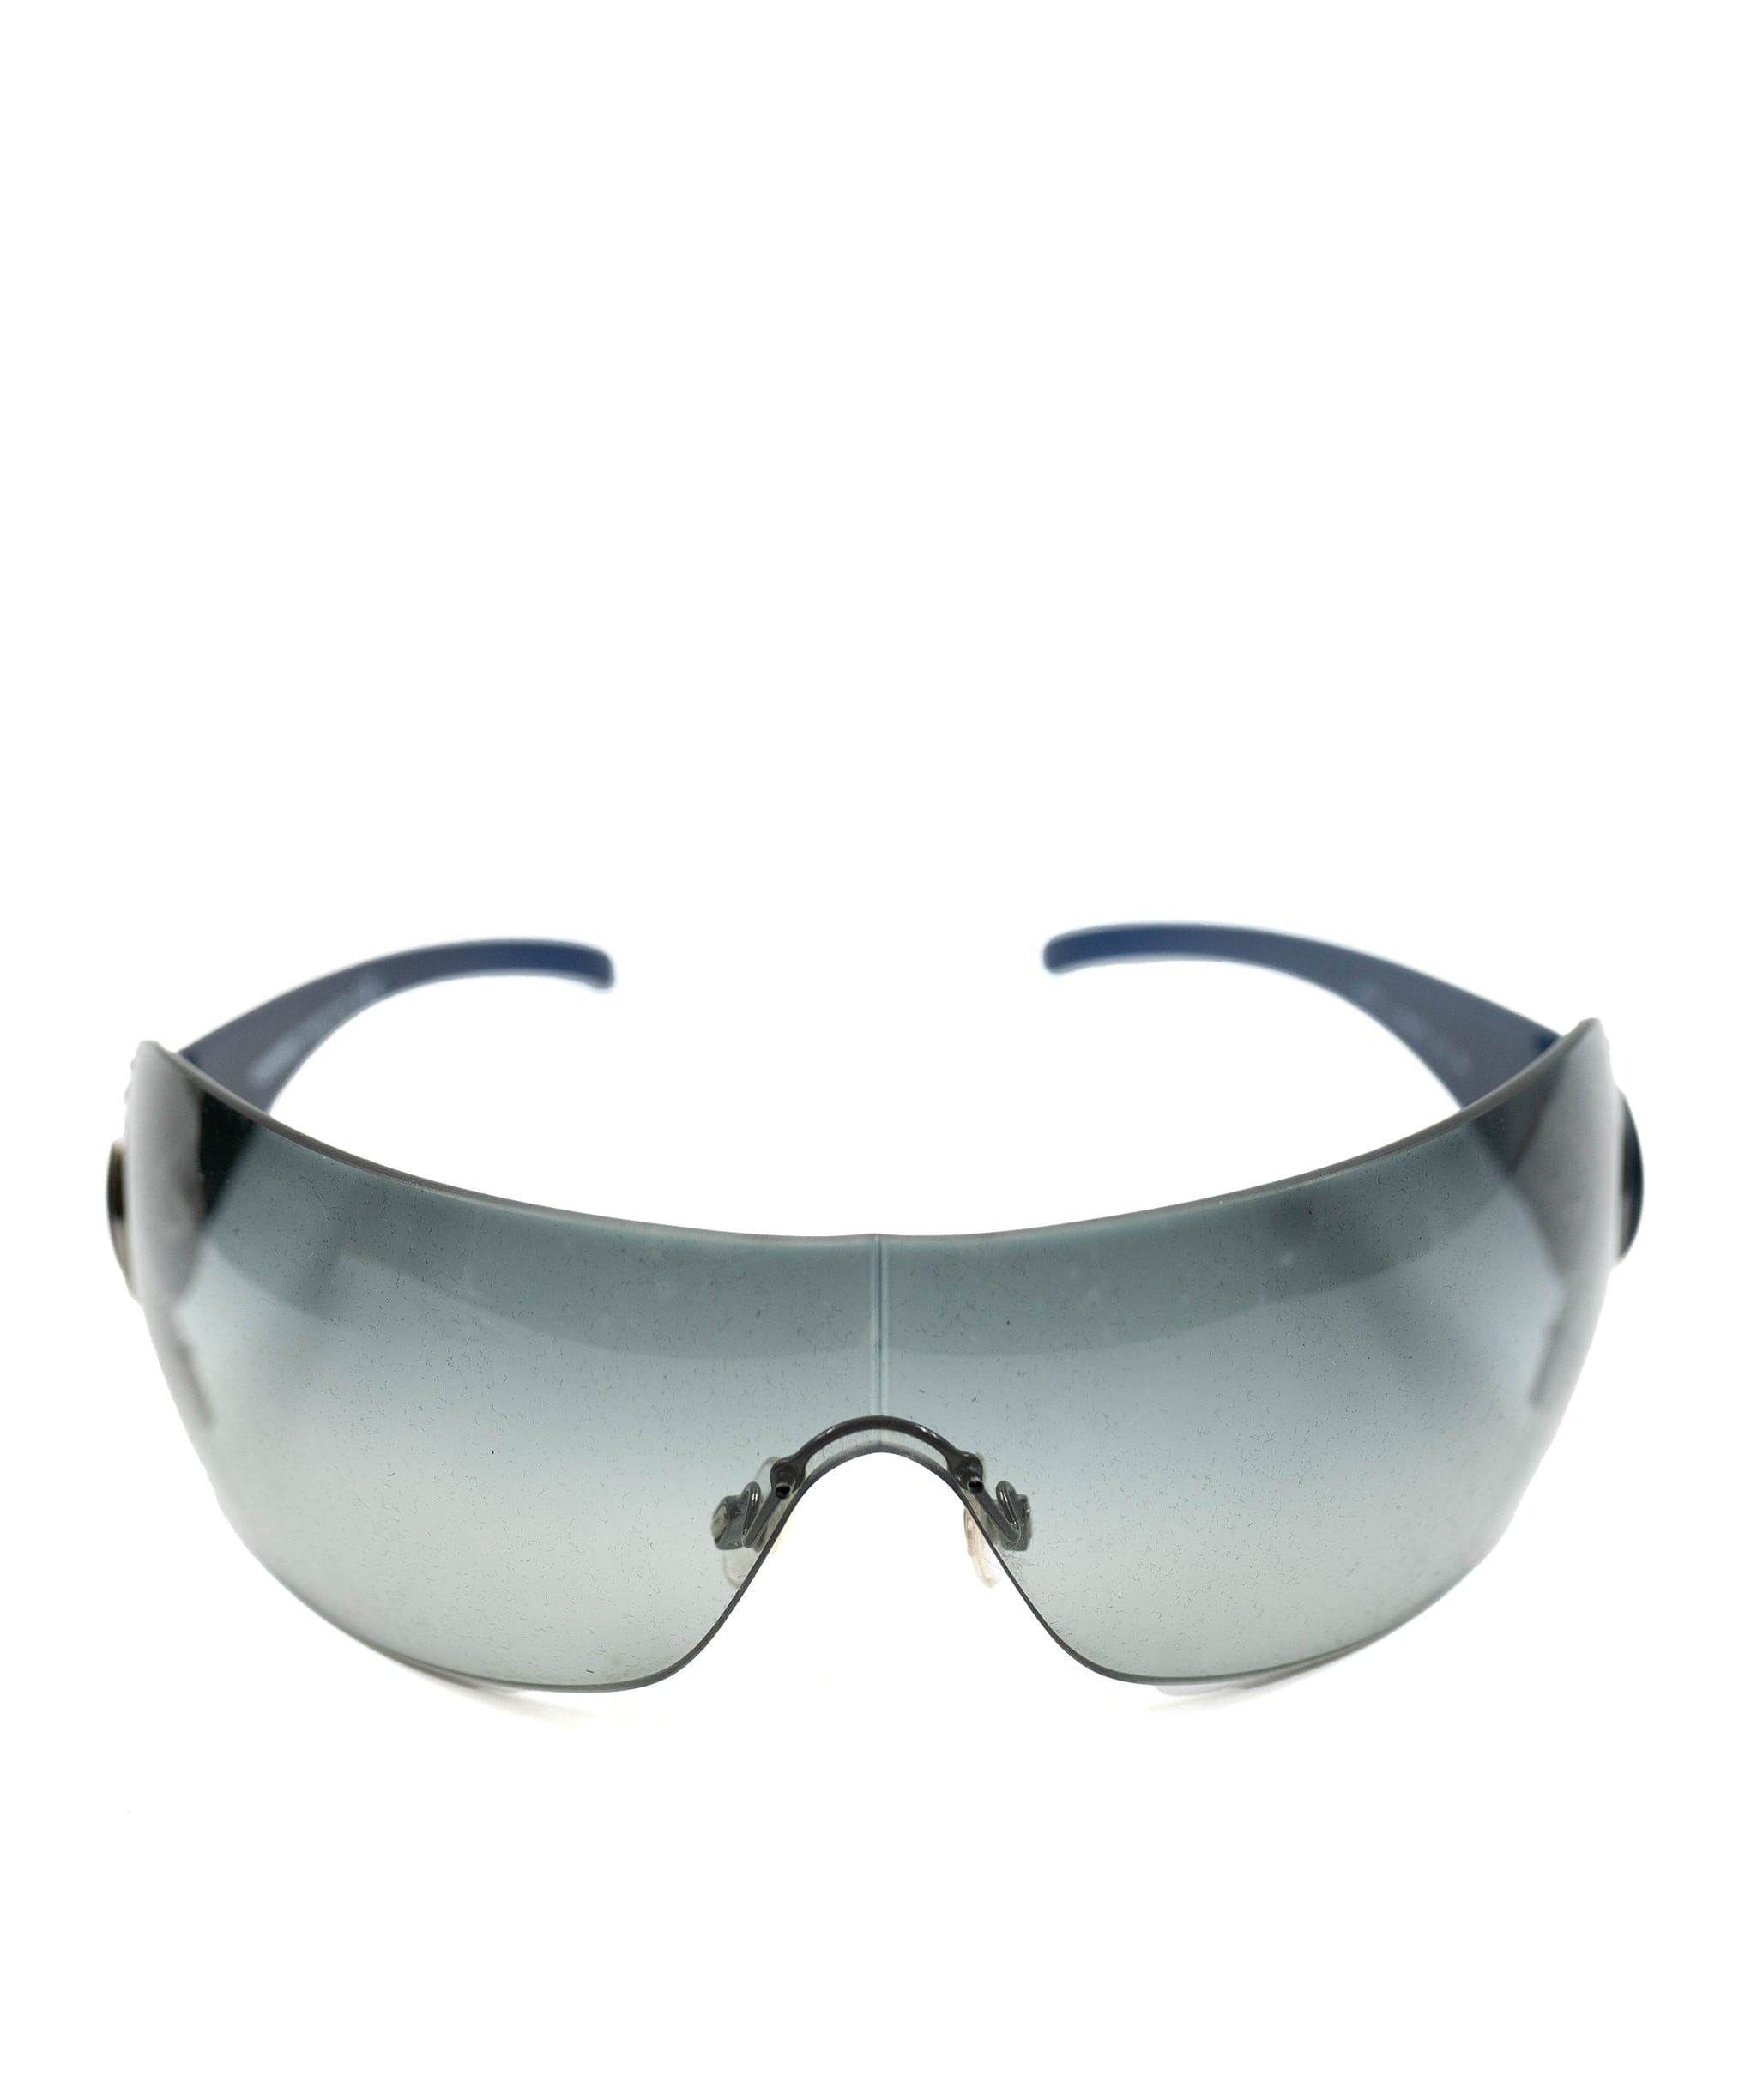 Chanel Y2K visor style sunglasses in navy. AGC1404